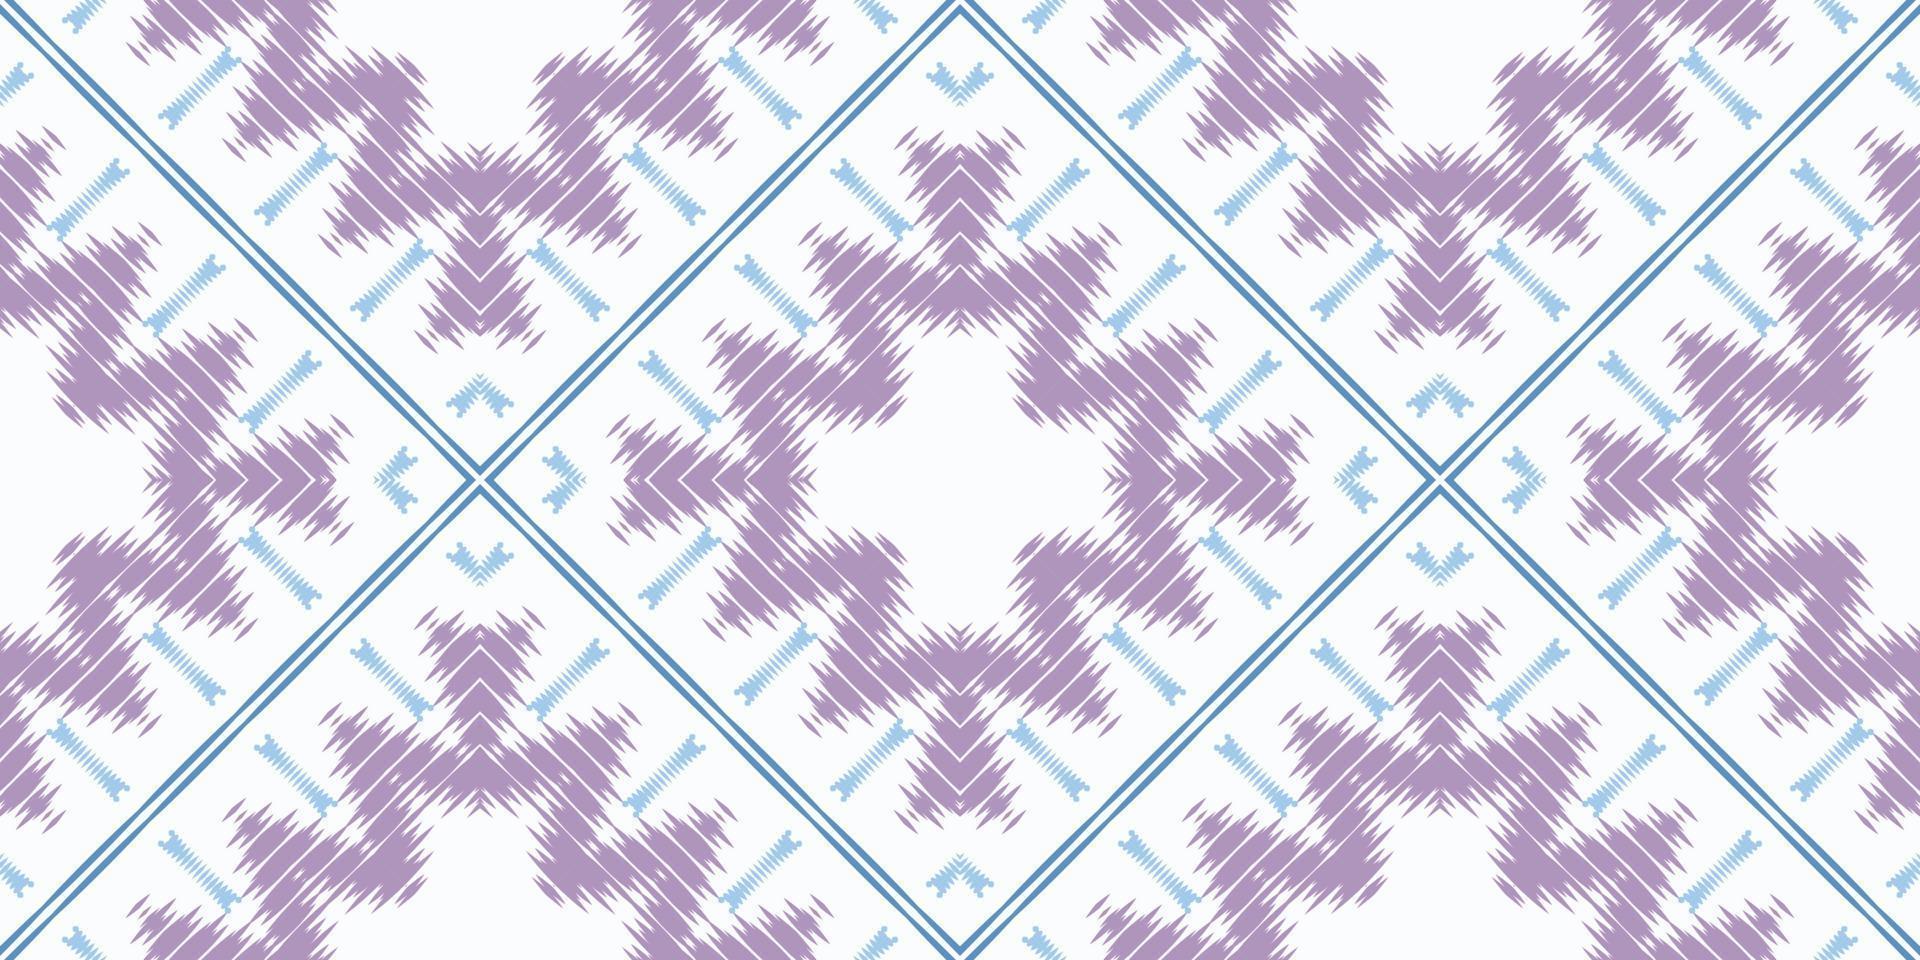 motivo ikat rayas batik textil patrón sin costuras diseño vectorial digital para imprimir sari kurti borde de tela símbolos de pincel muestras elegantes vector